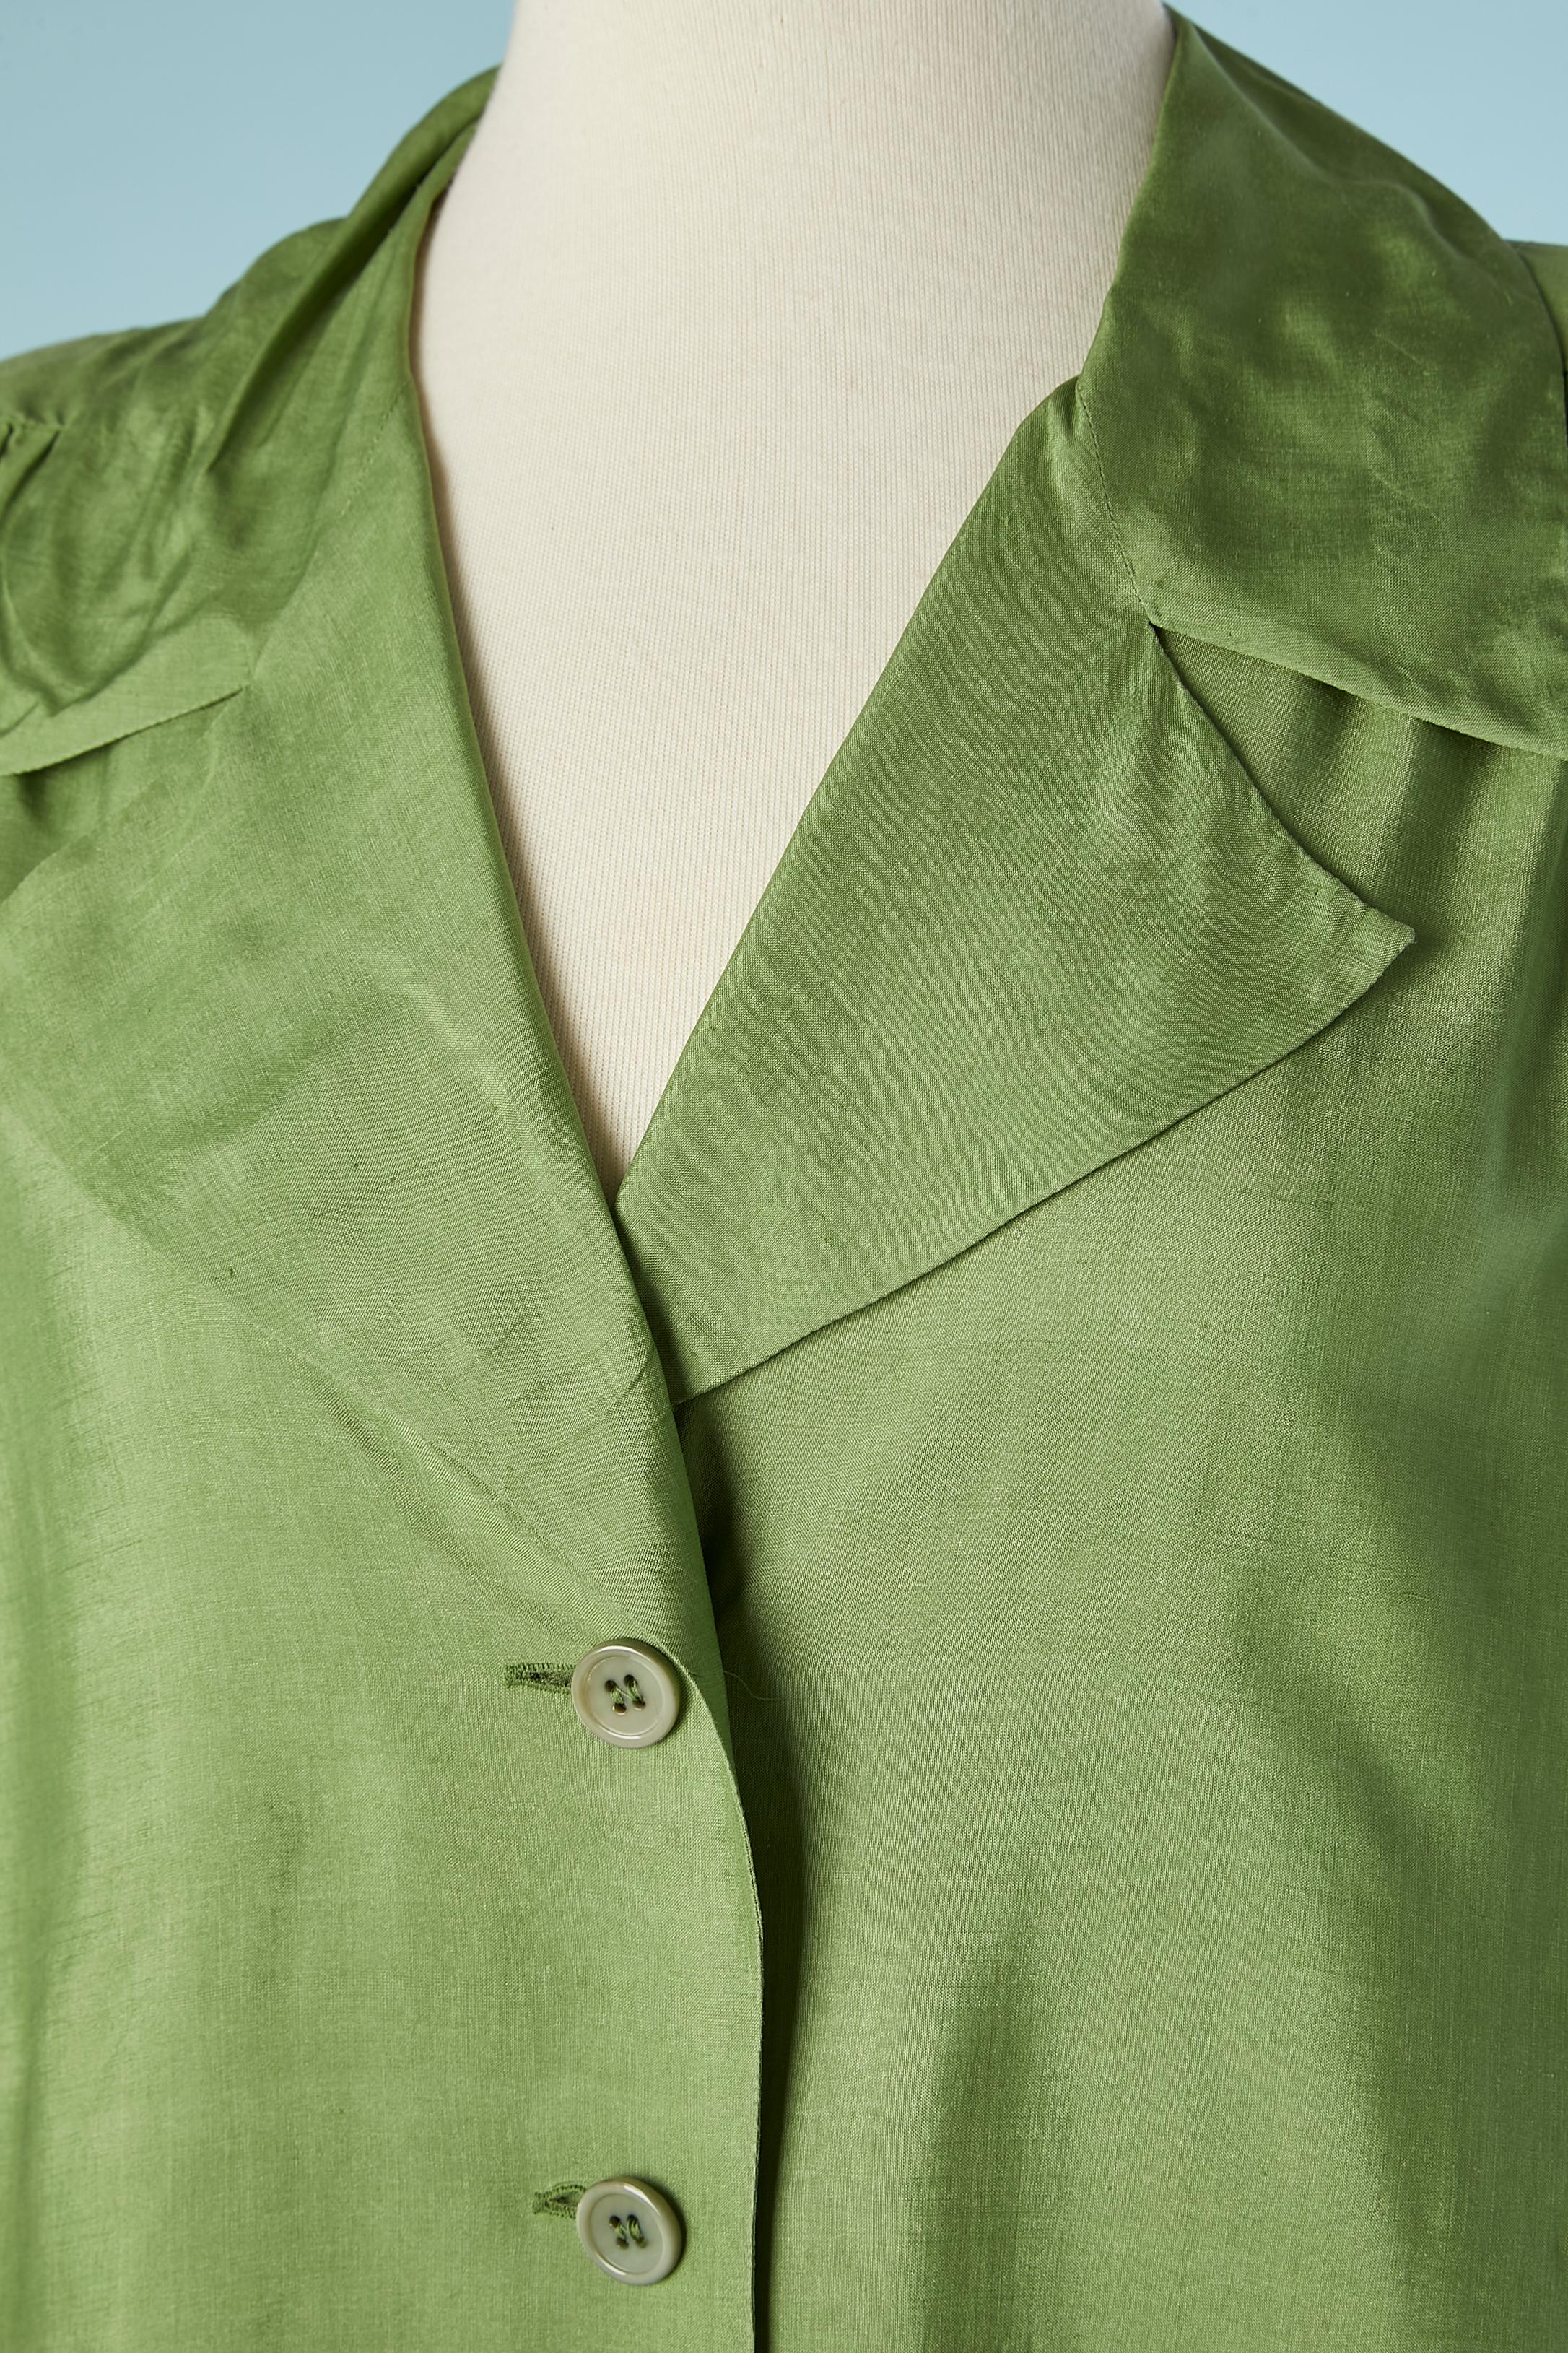 Green raw silk shirt. Shoulder pads. Gathers on the shoulder line.
SIZE 38 (Fr) 8 (Us) M 